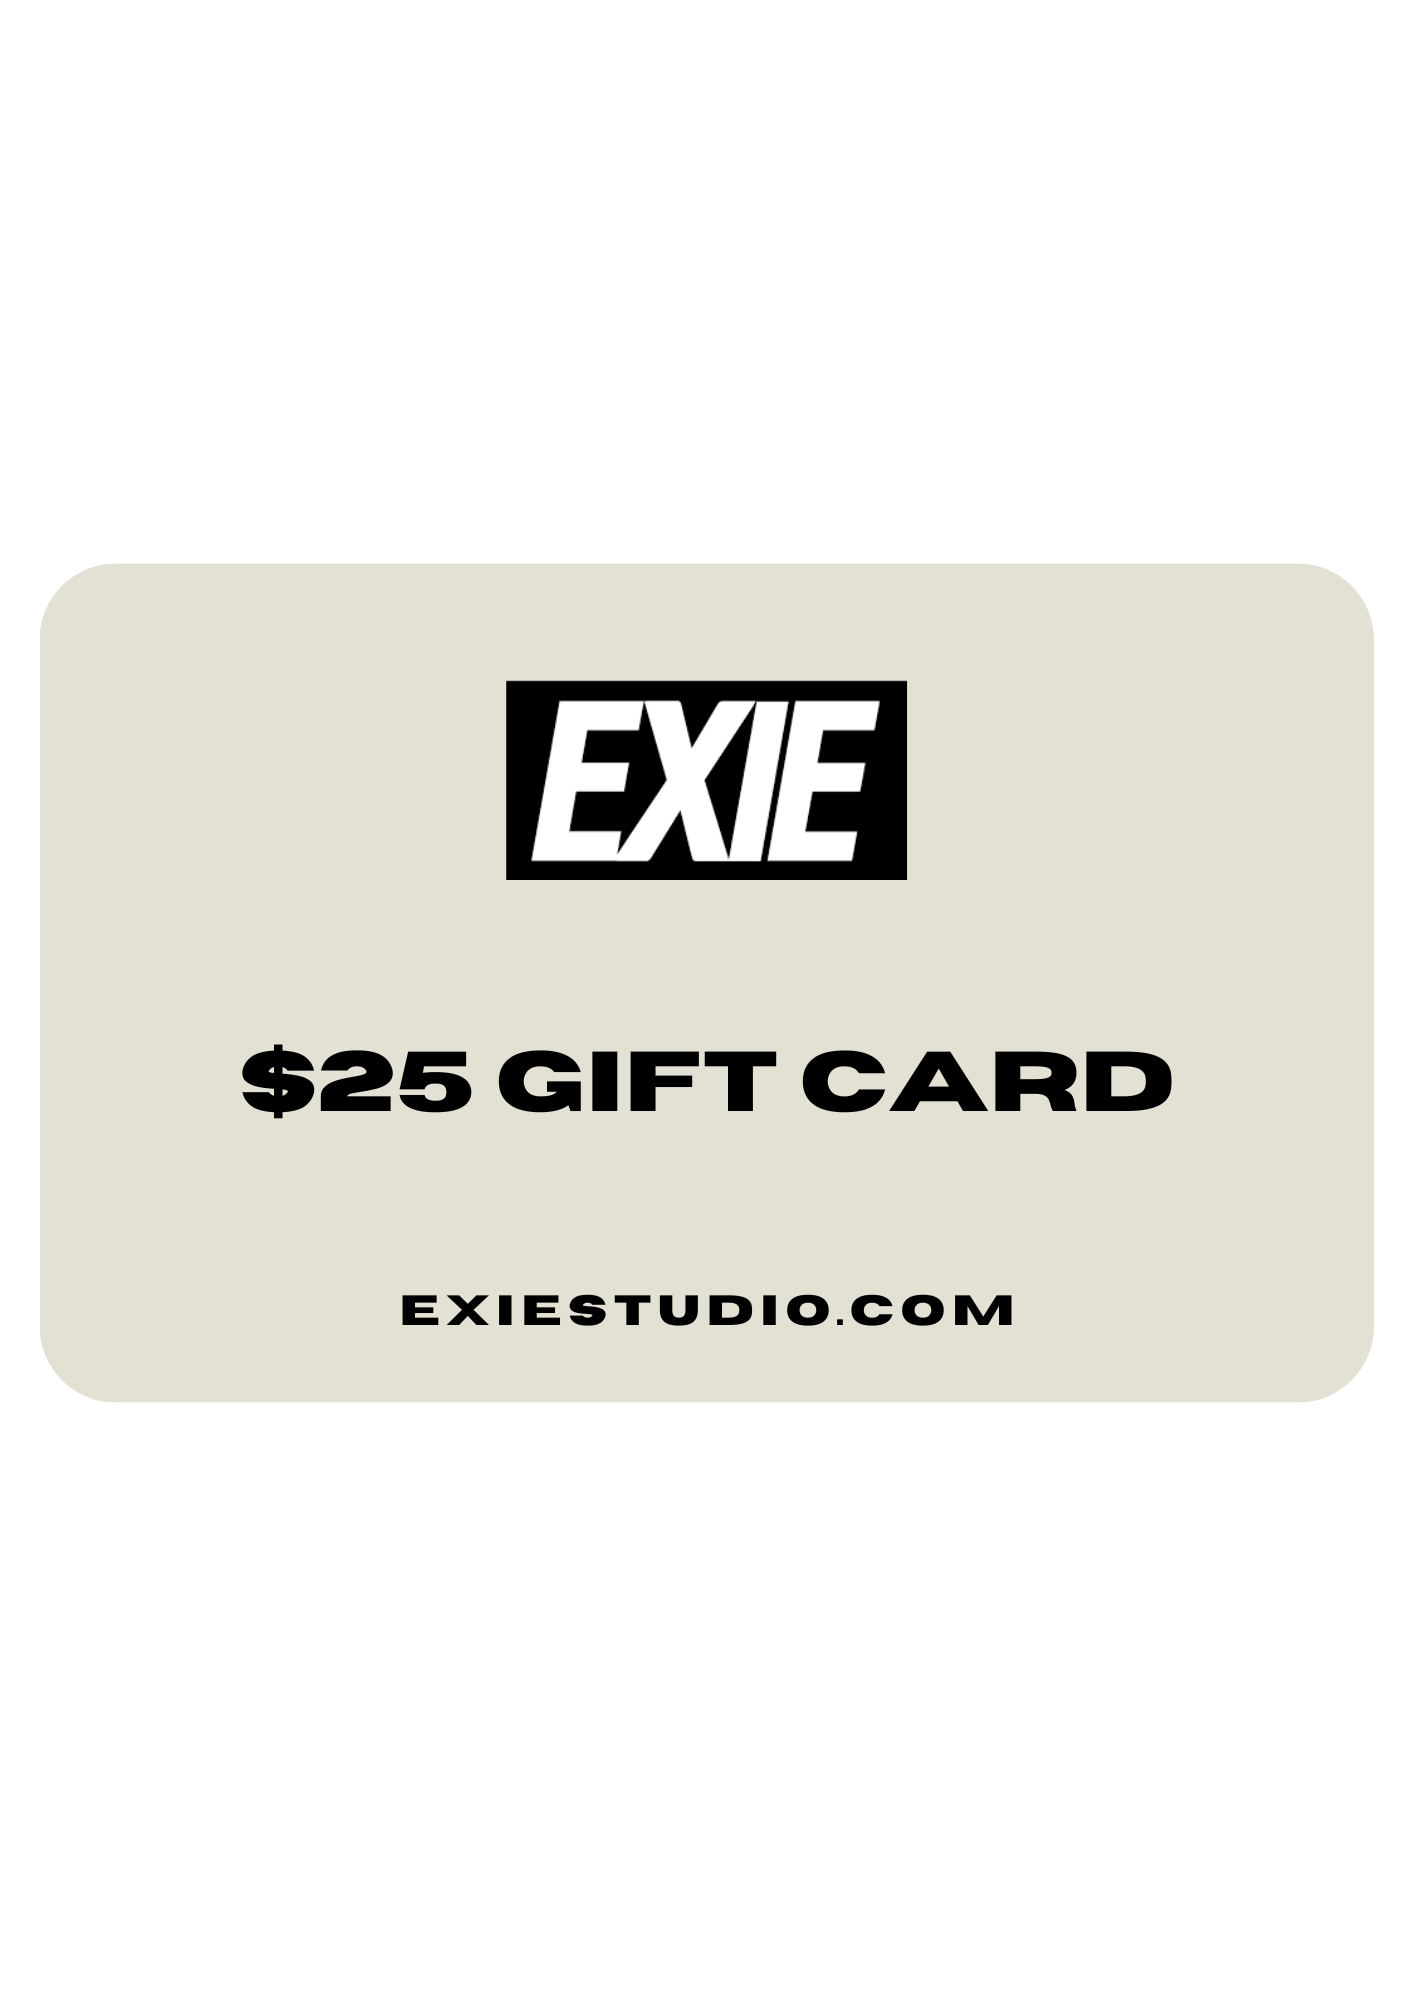 EXIE E-GIFT CARD